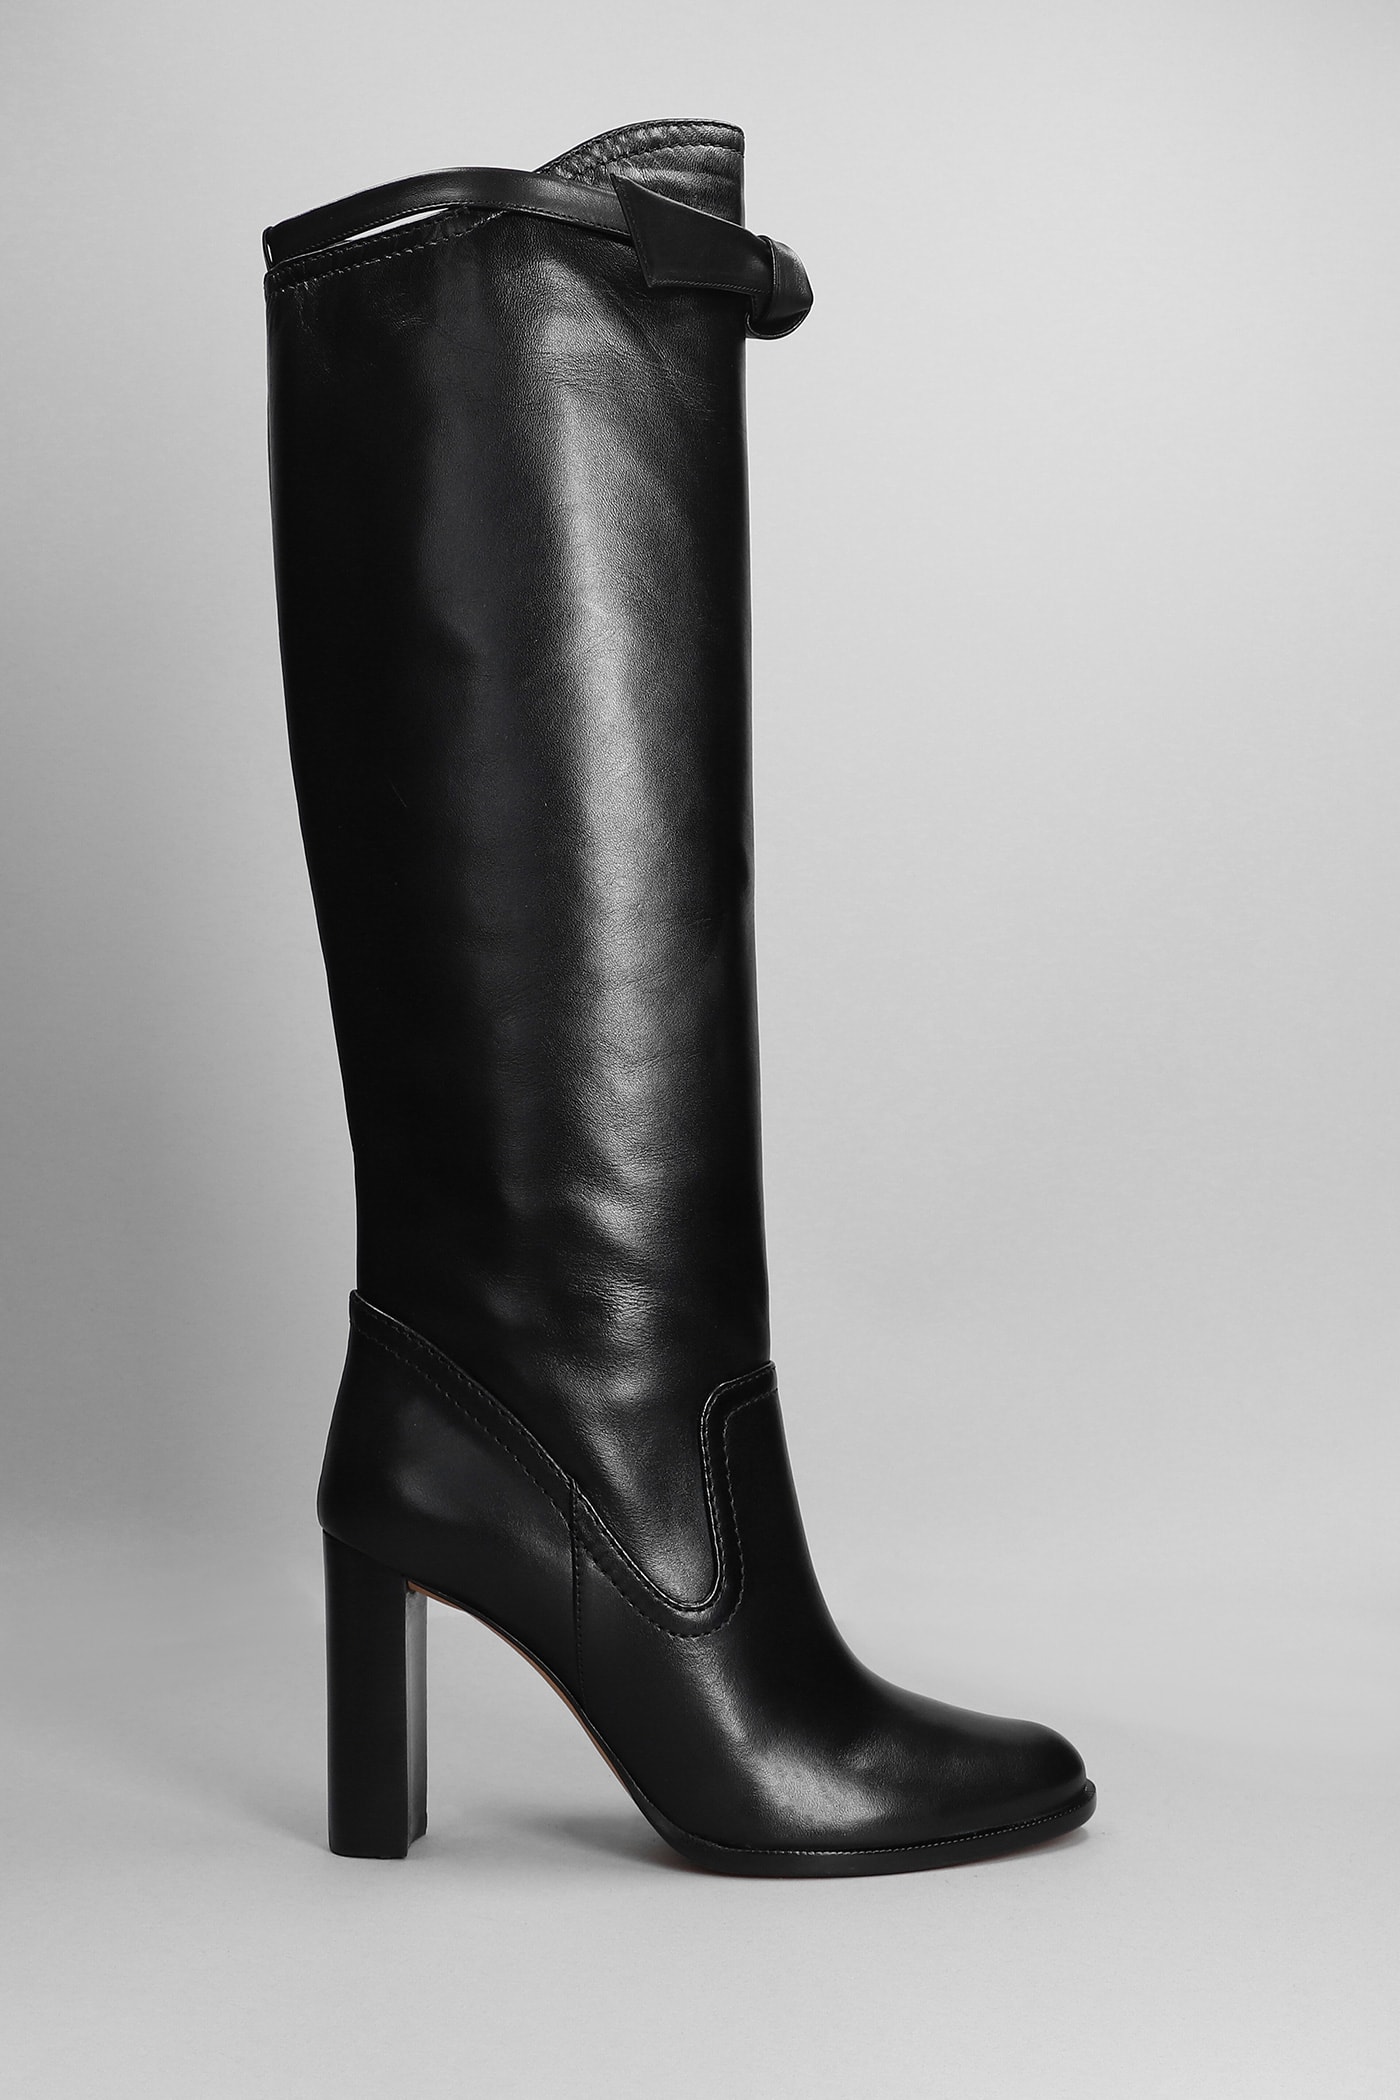 Alexandre Birman High Heels Boots In Black Leather